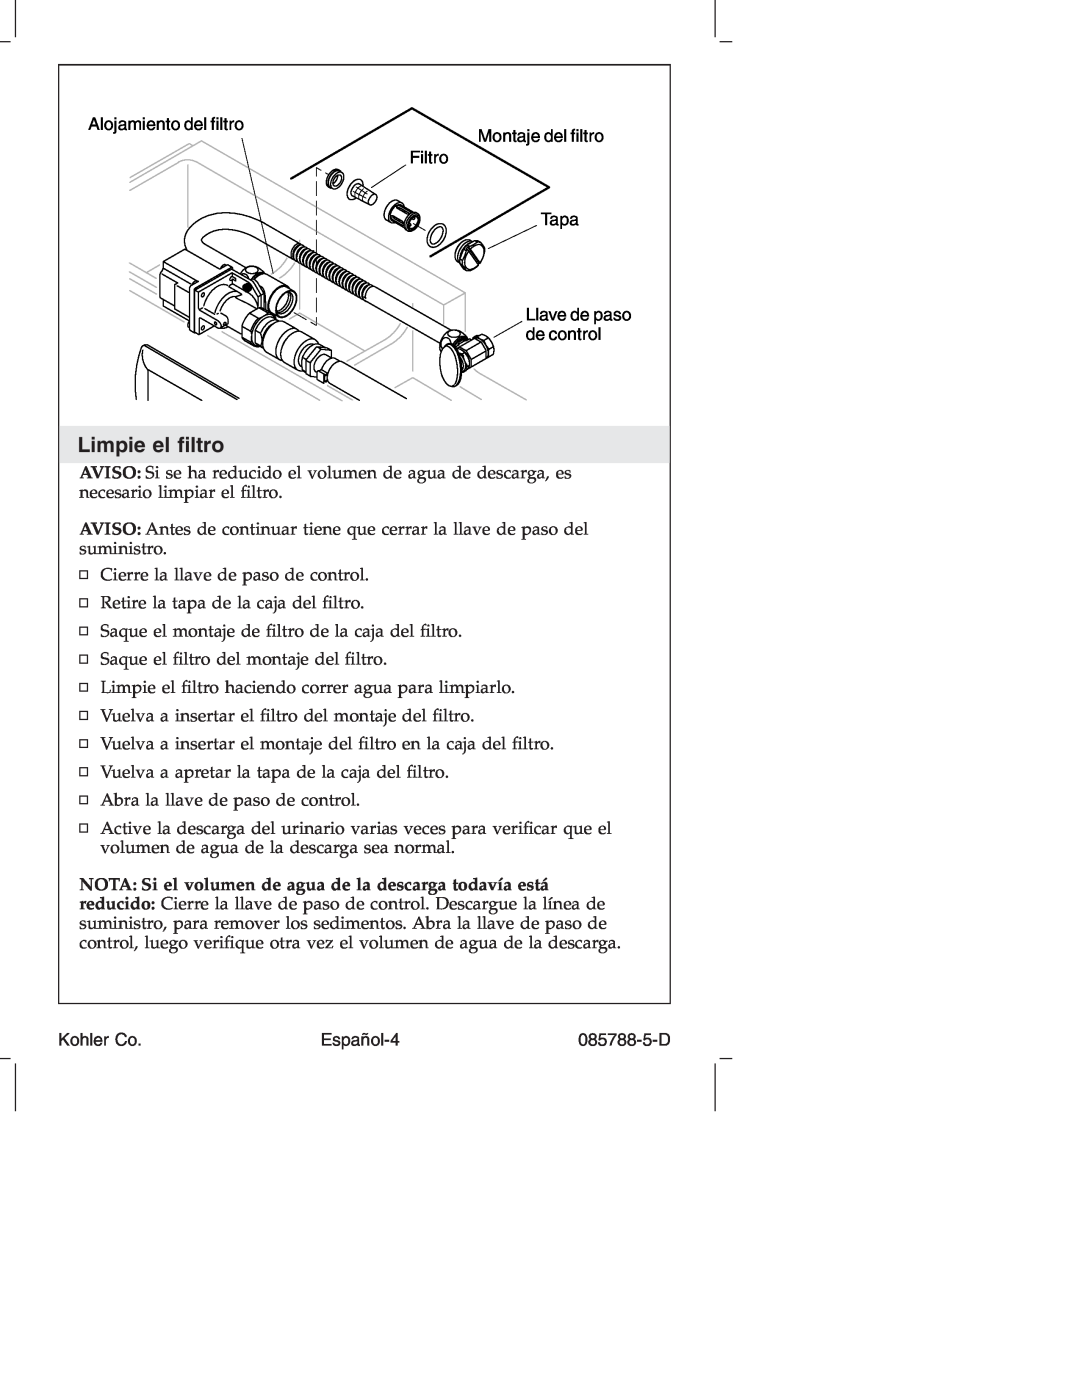 Kohler K4915 manual Limpie el ﬁltro, Español-4, Kohler Co, 085788-5-D 